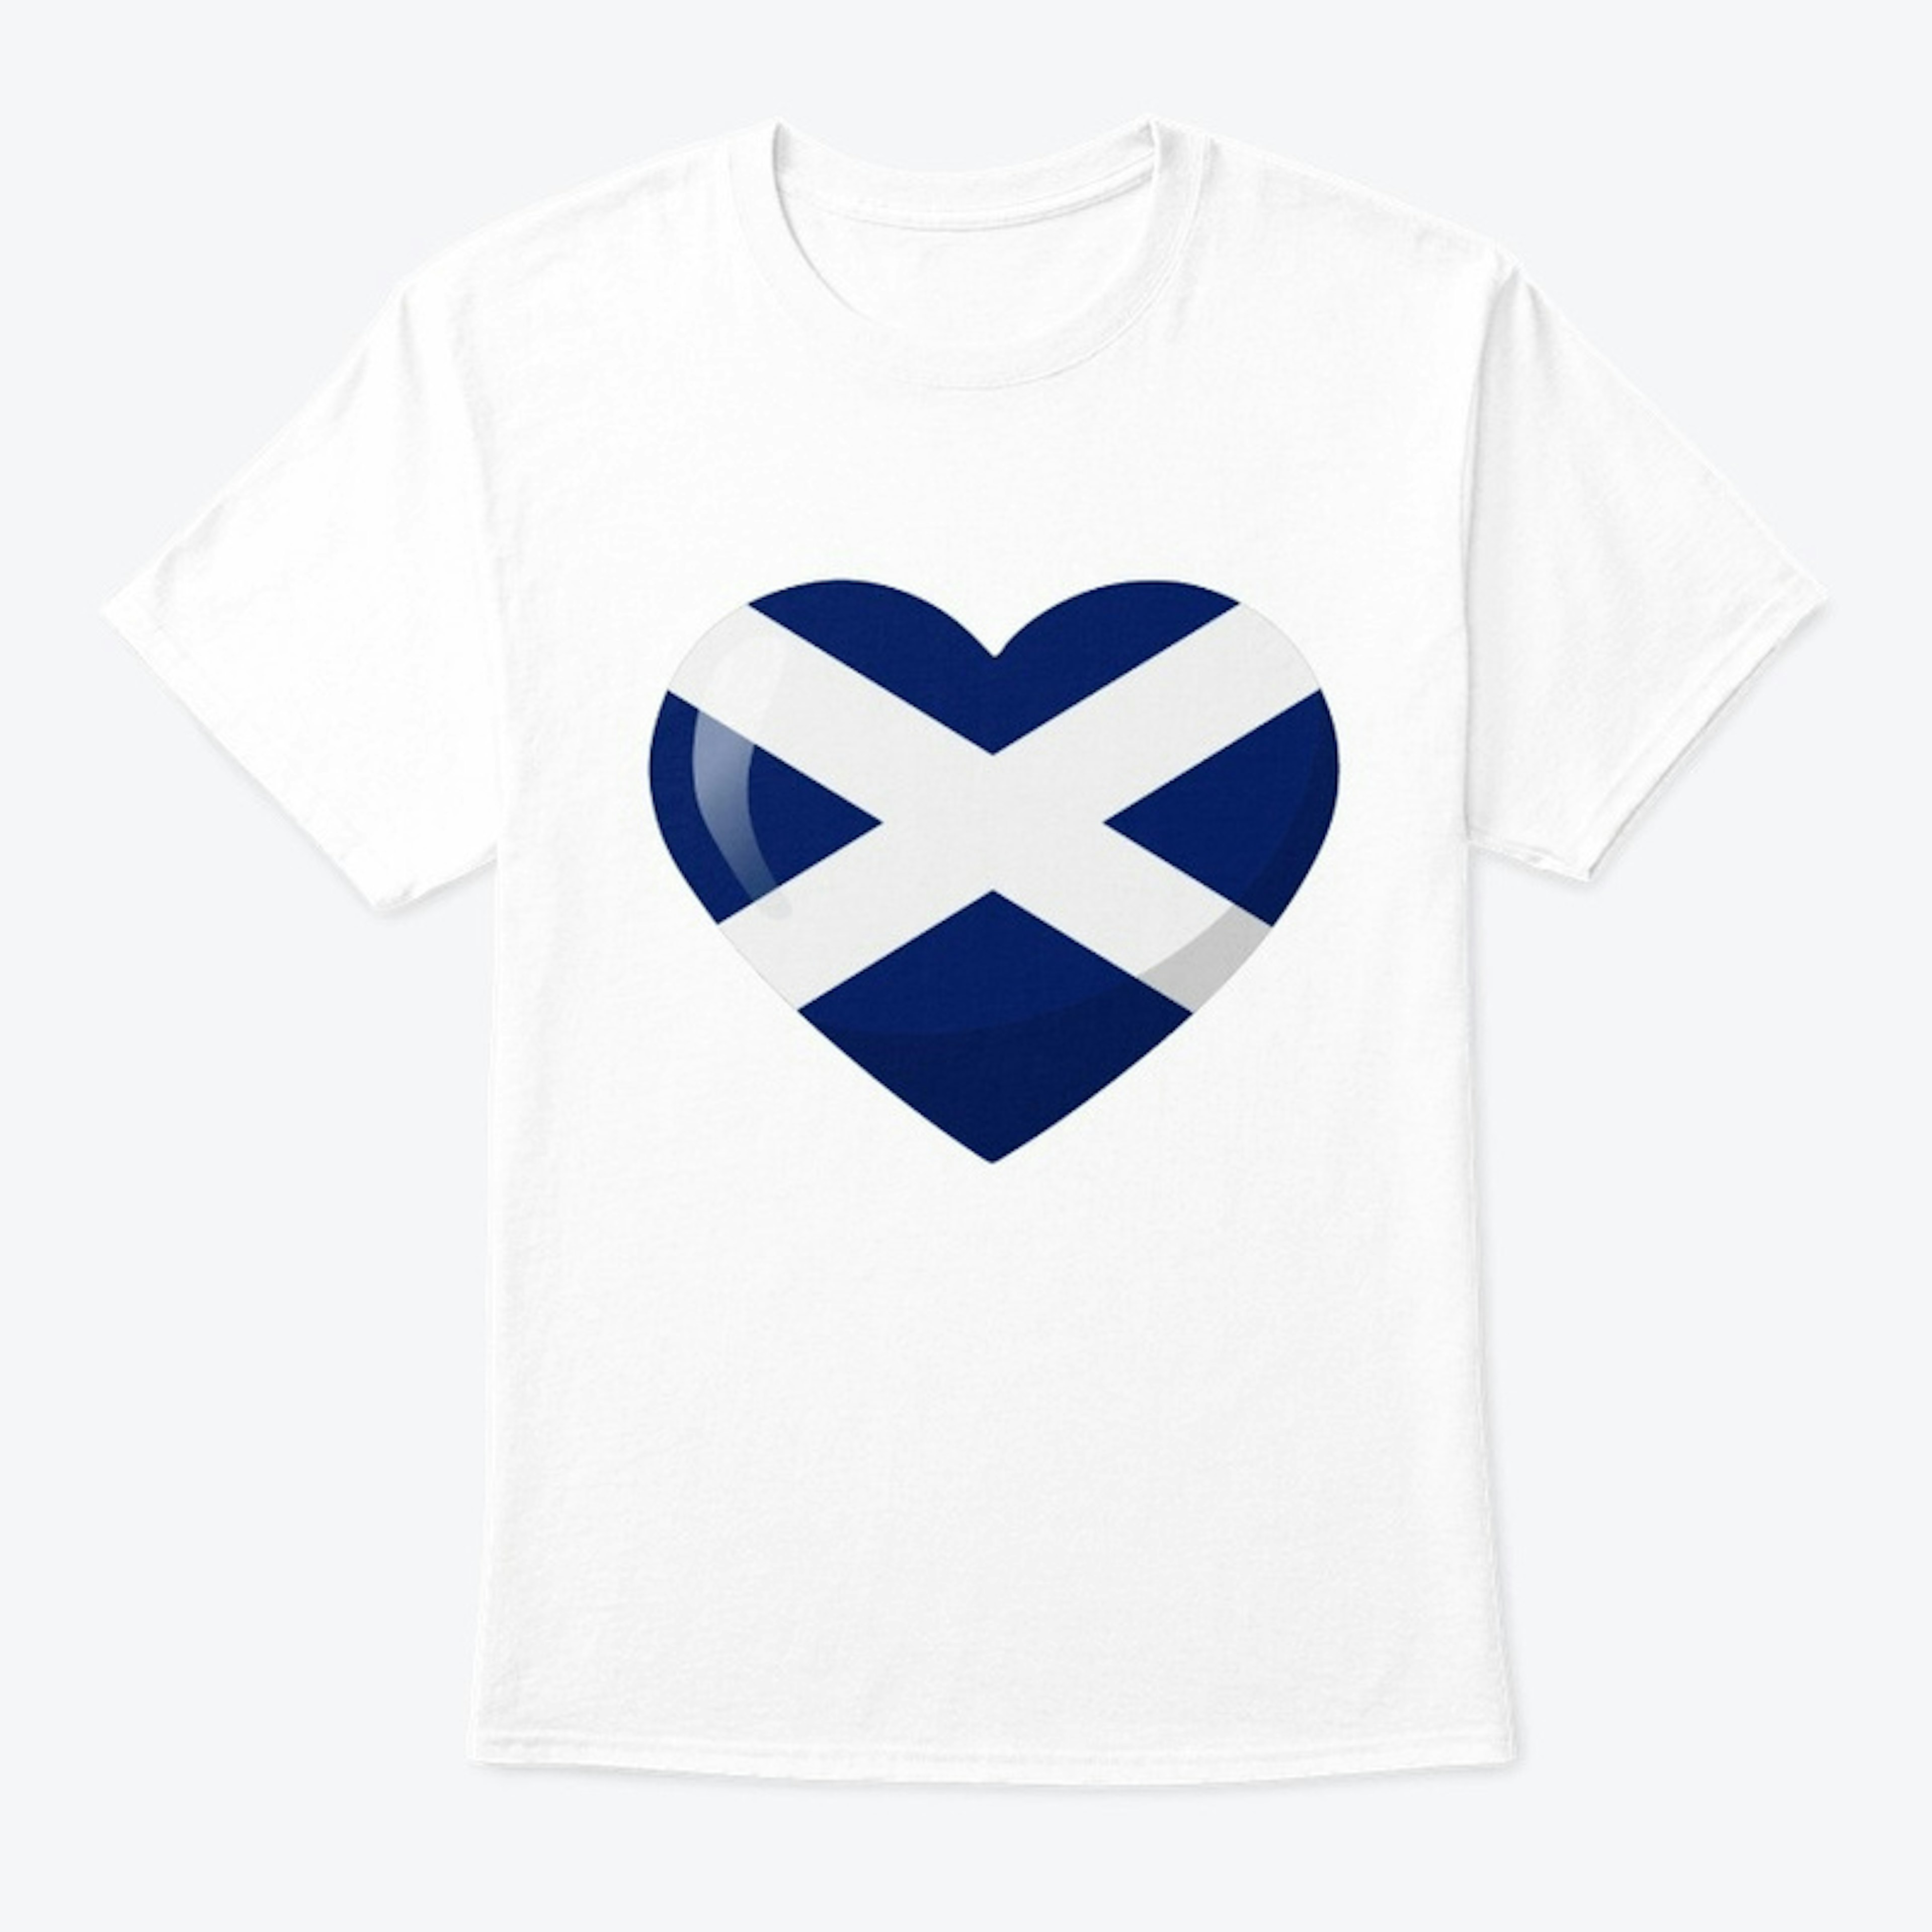 Scotland Heart